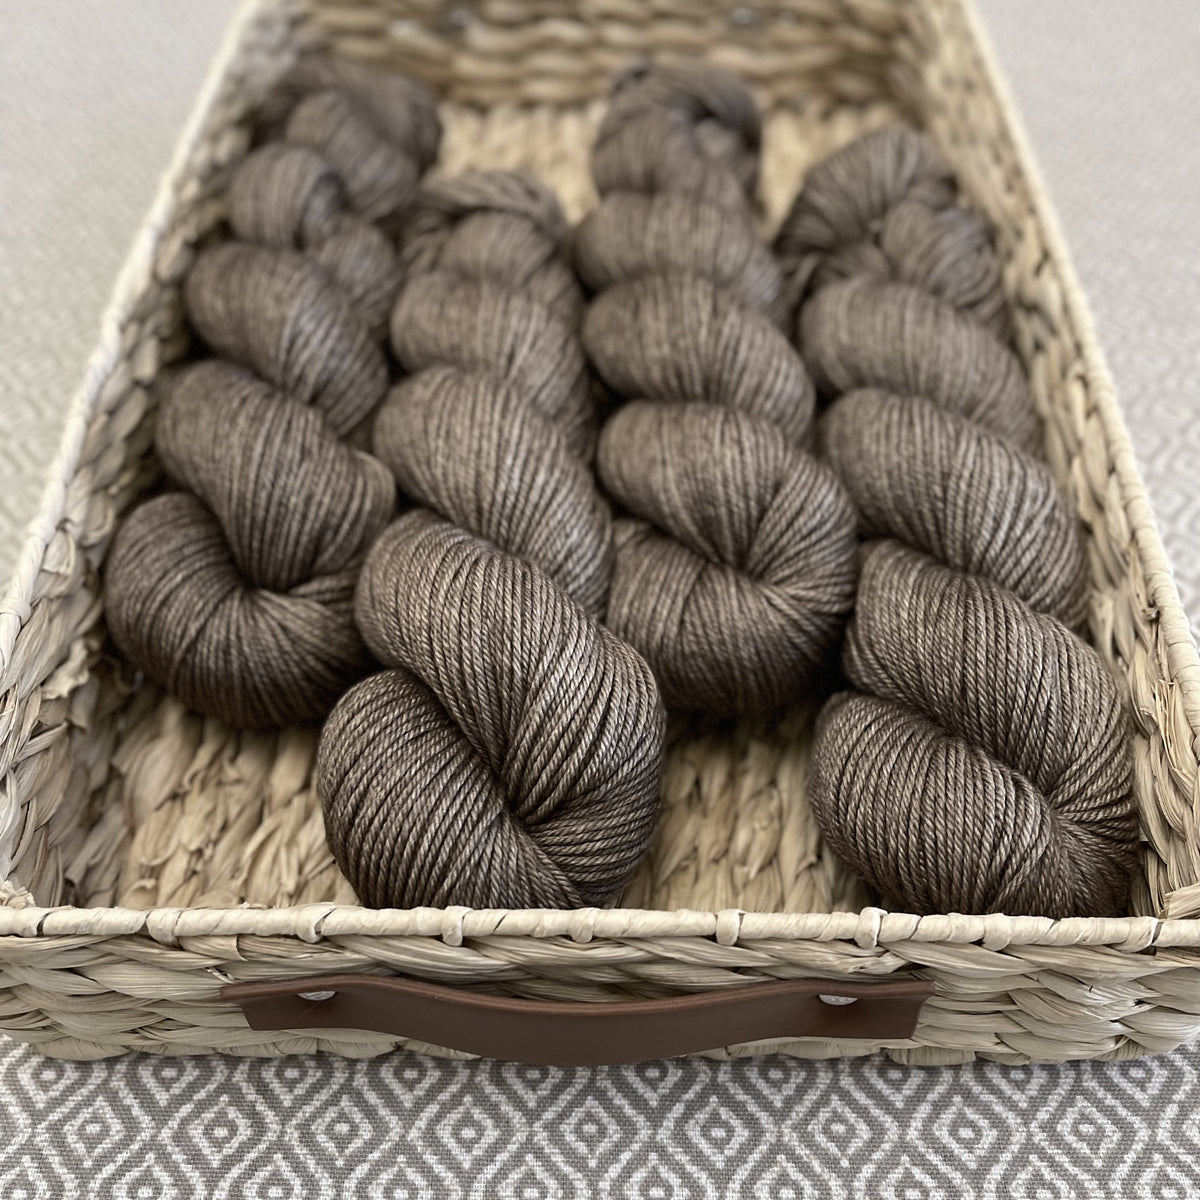 Off-The-Yak Medium Worsted Weight #4, Crochet Yarn for Knitting and Crocheting, 25% Yak, 50% Wool, 25% Acrylic, 3-Skein Pack, 360yds/300g (Dark